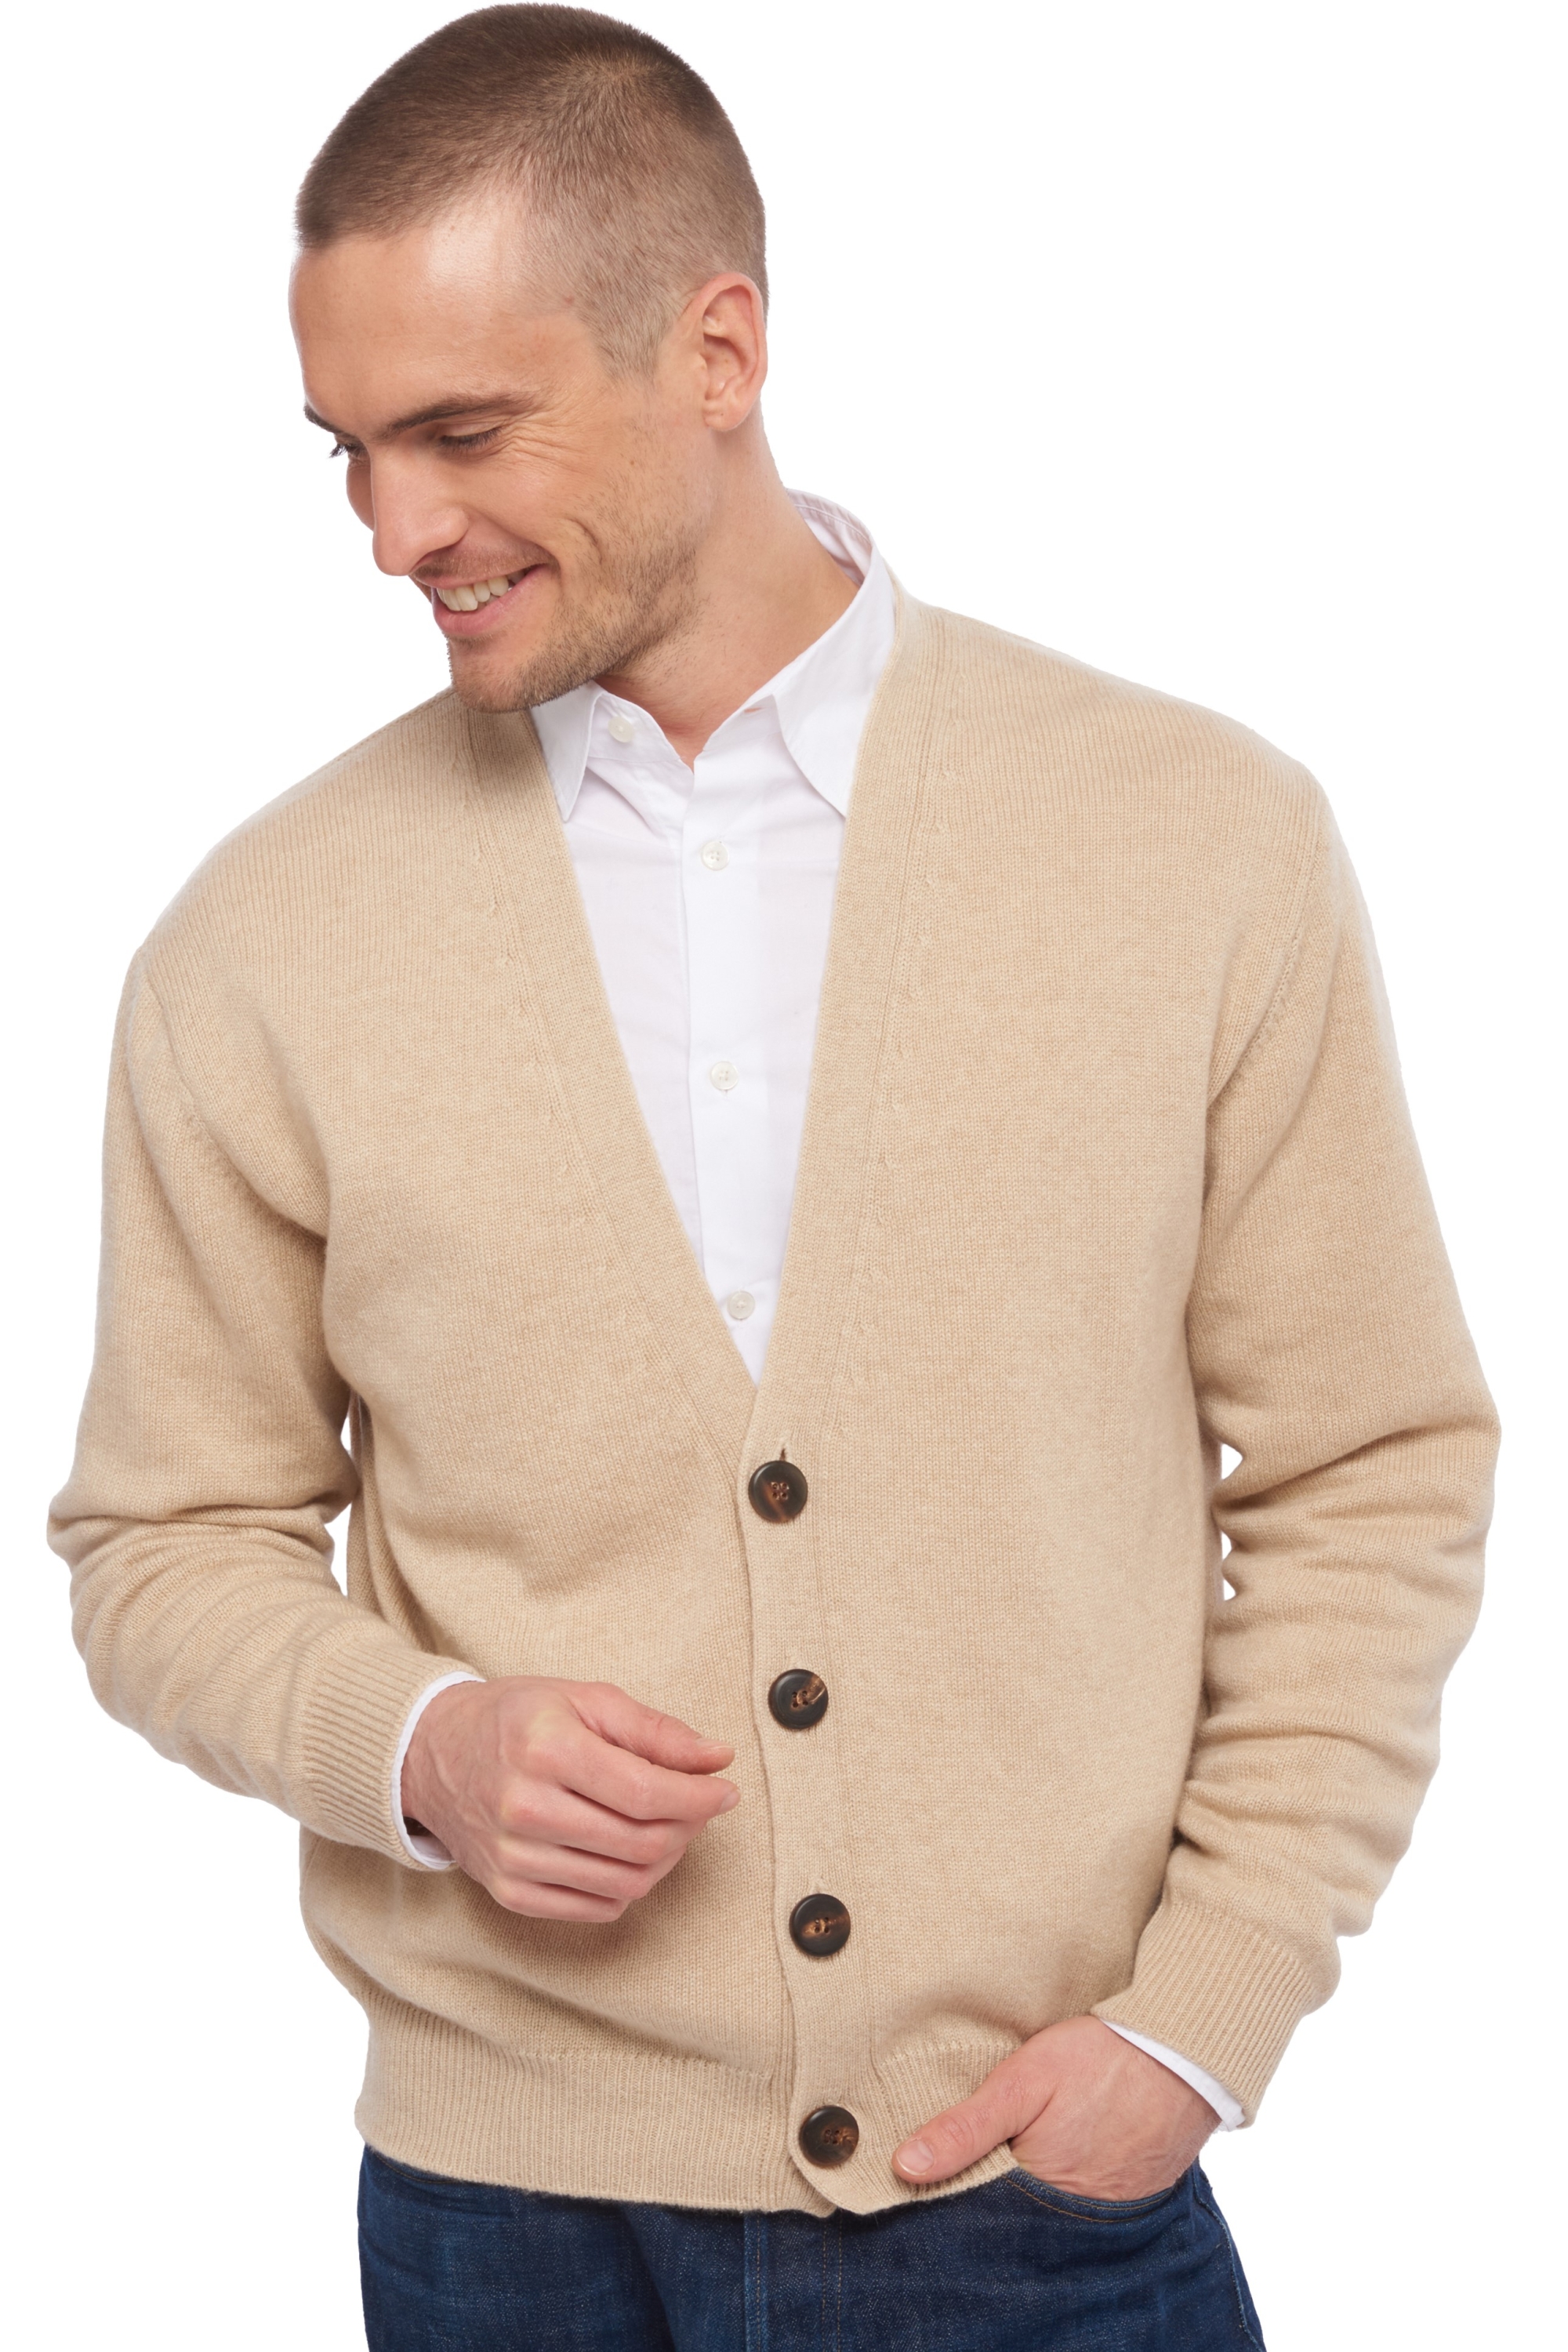 Yak men waistcoat sleeveless sweaters podrick vintage beige chine 2xl